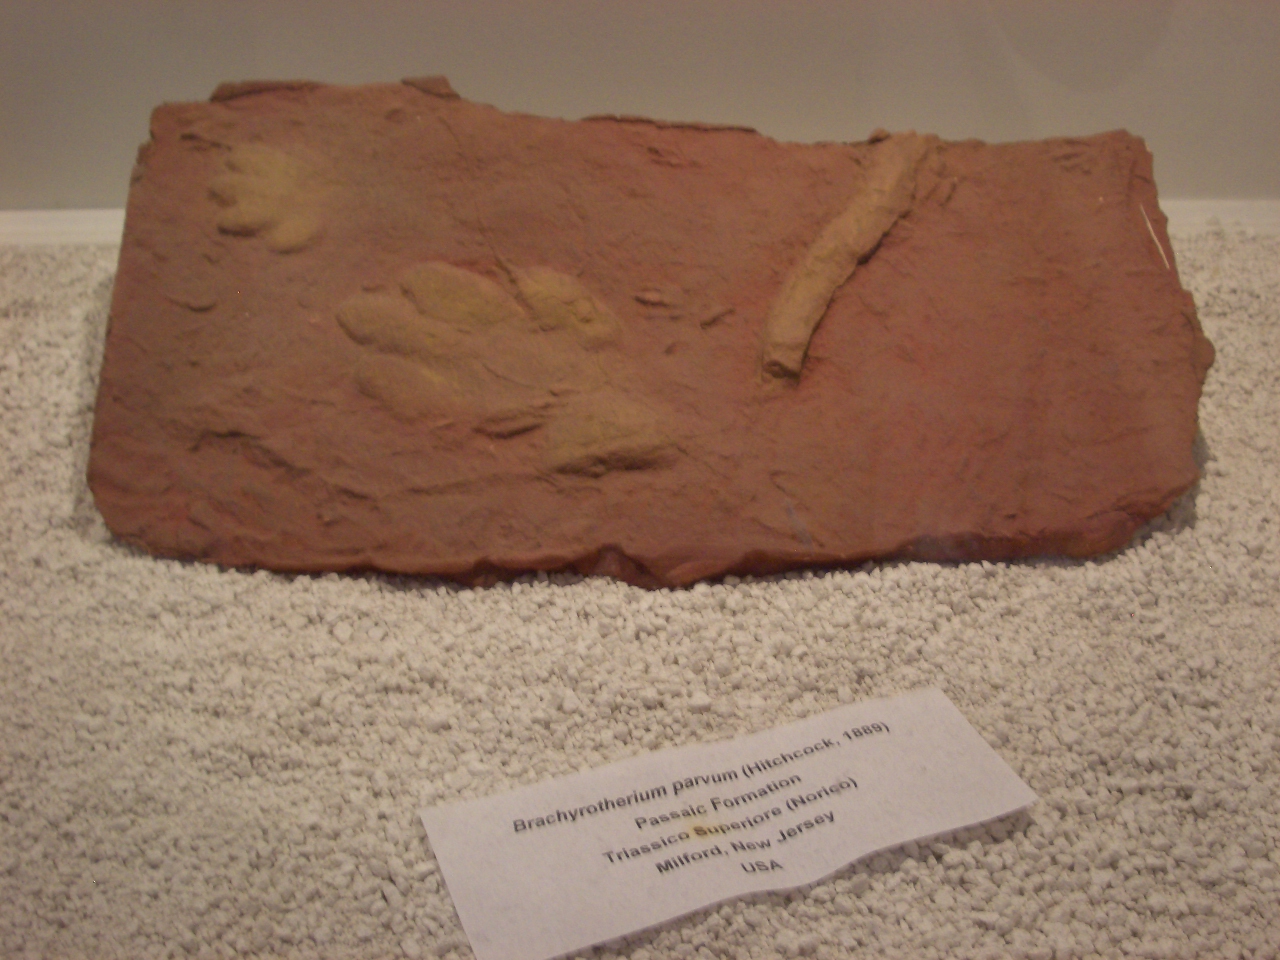 ichnofossile (Impronta su superficie, esemplare)